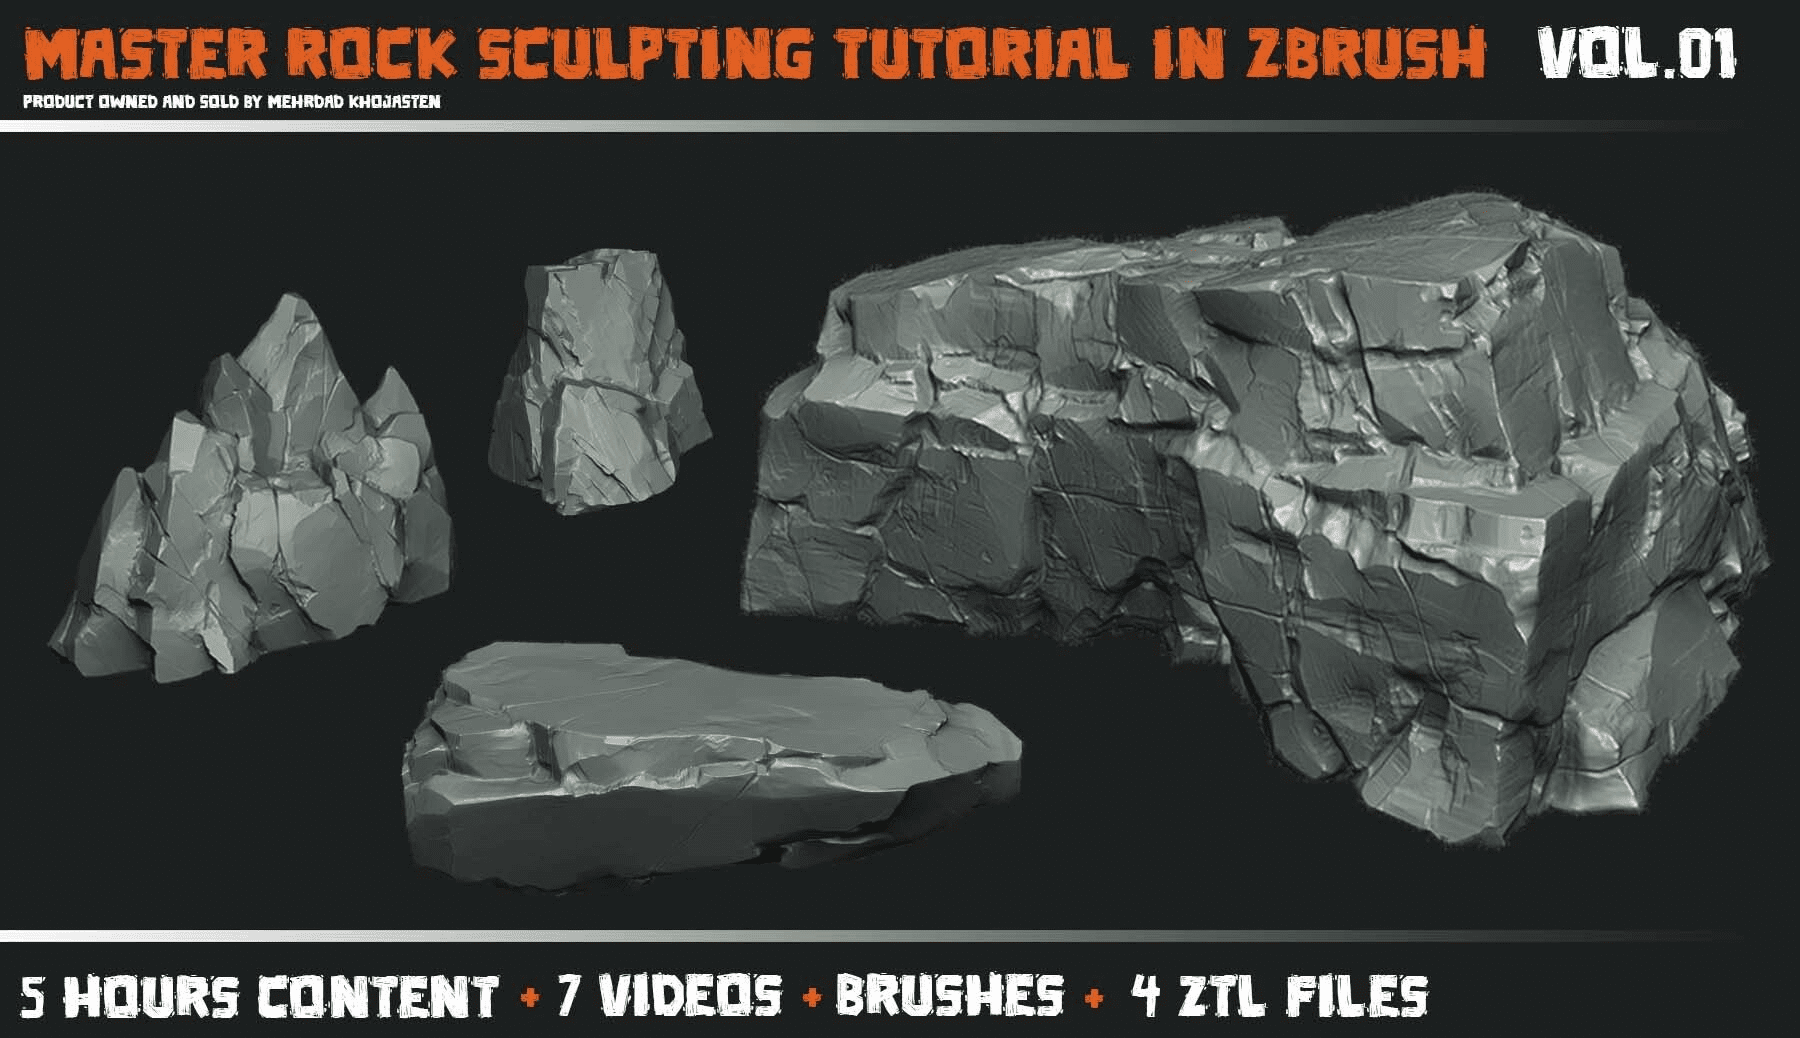 Mastering Rock Sculpting Tutorial in Zbrush